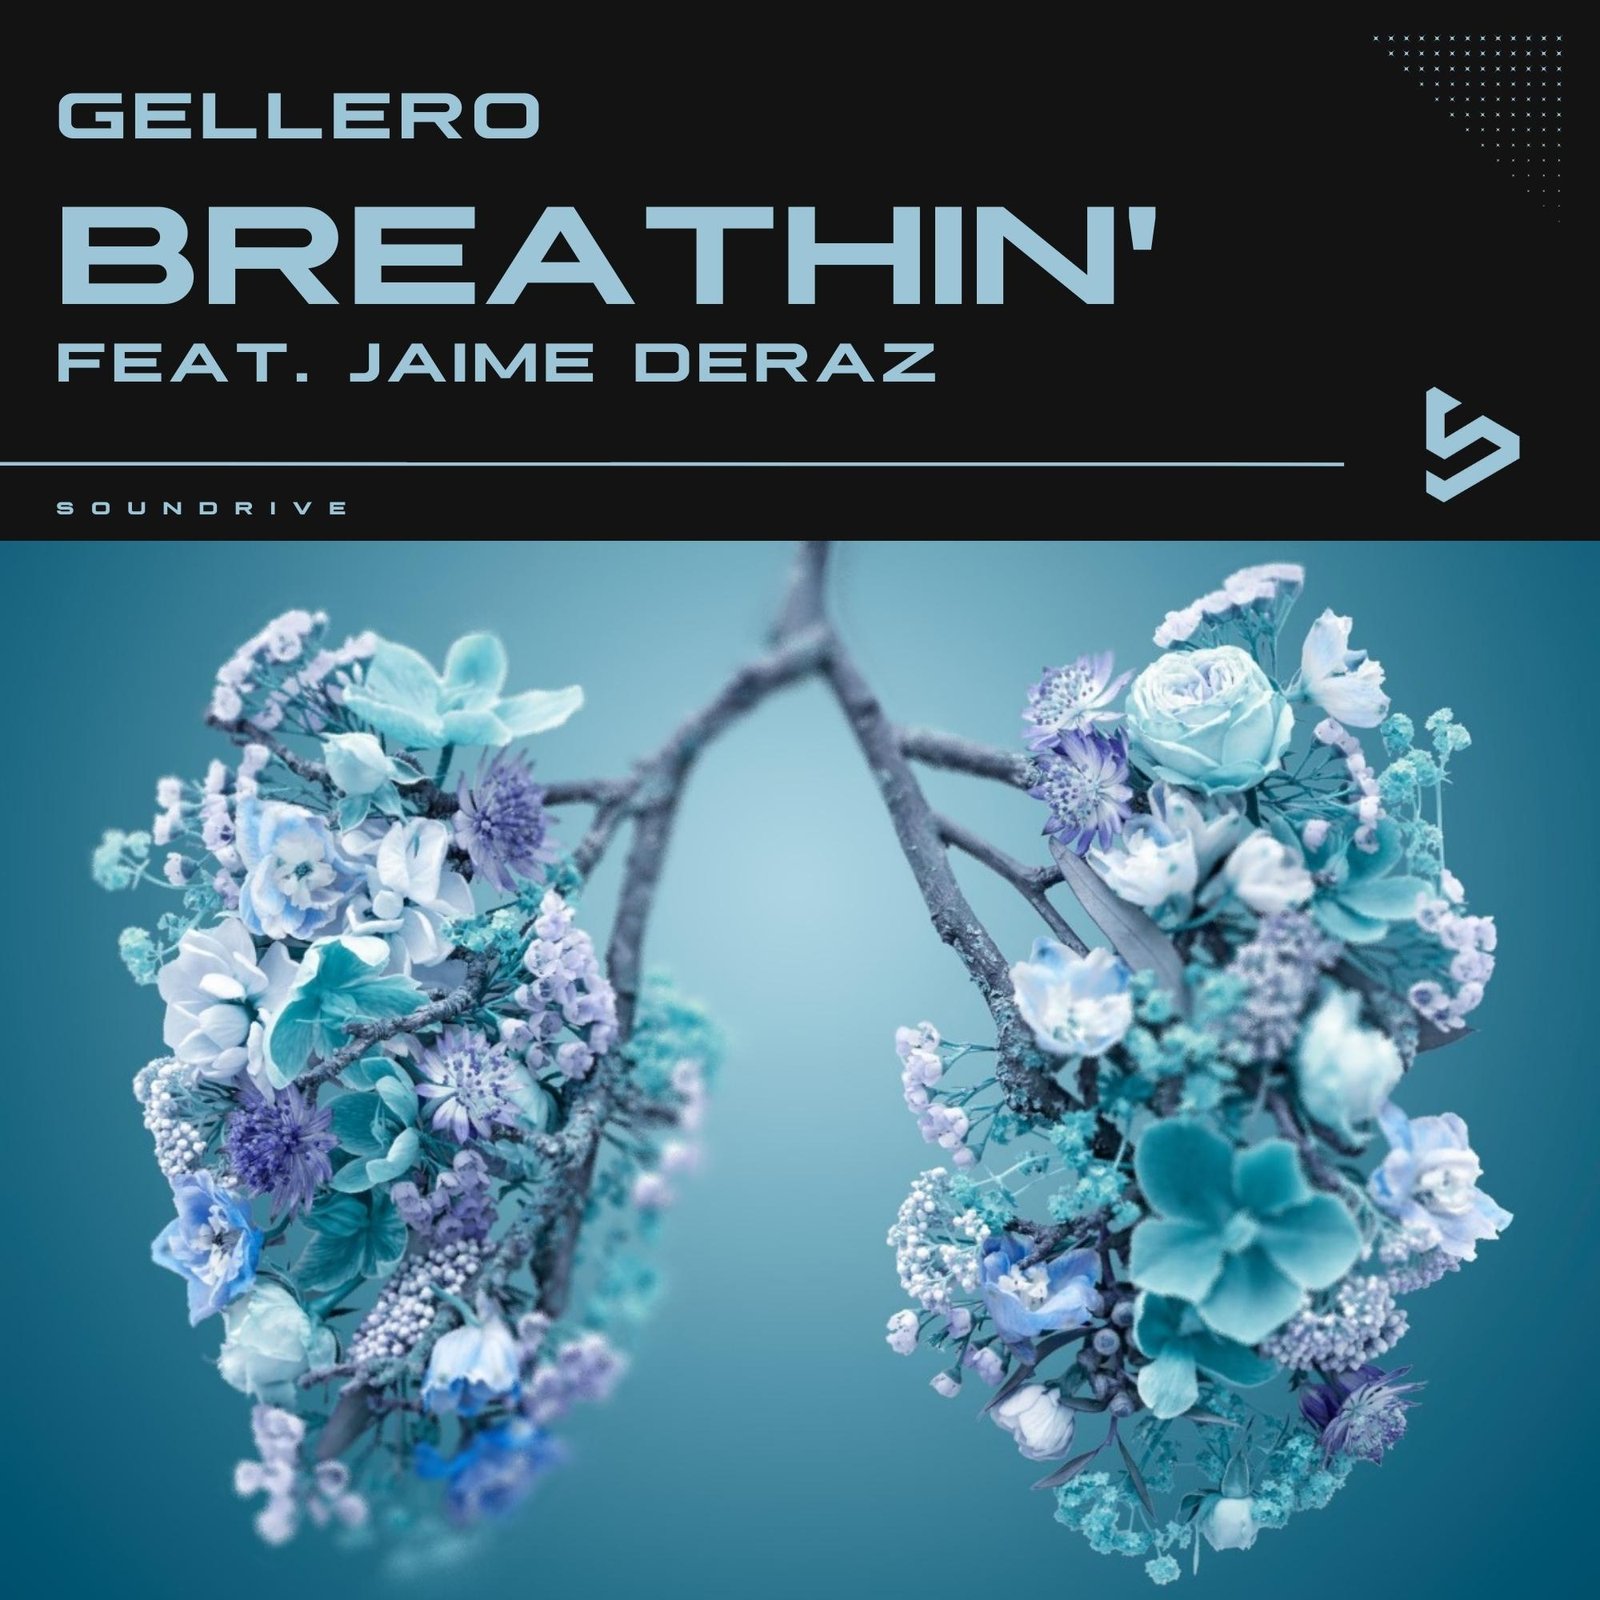 Gellero - Breathin' (feat. Jaime Deraz) out now on Soundrive Music!